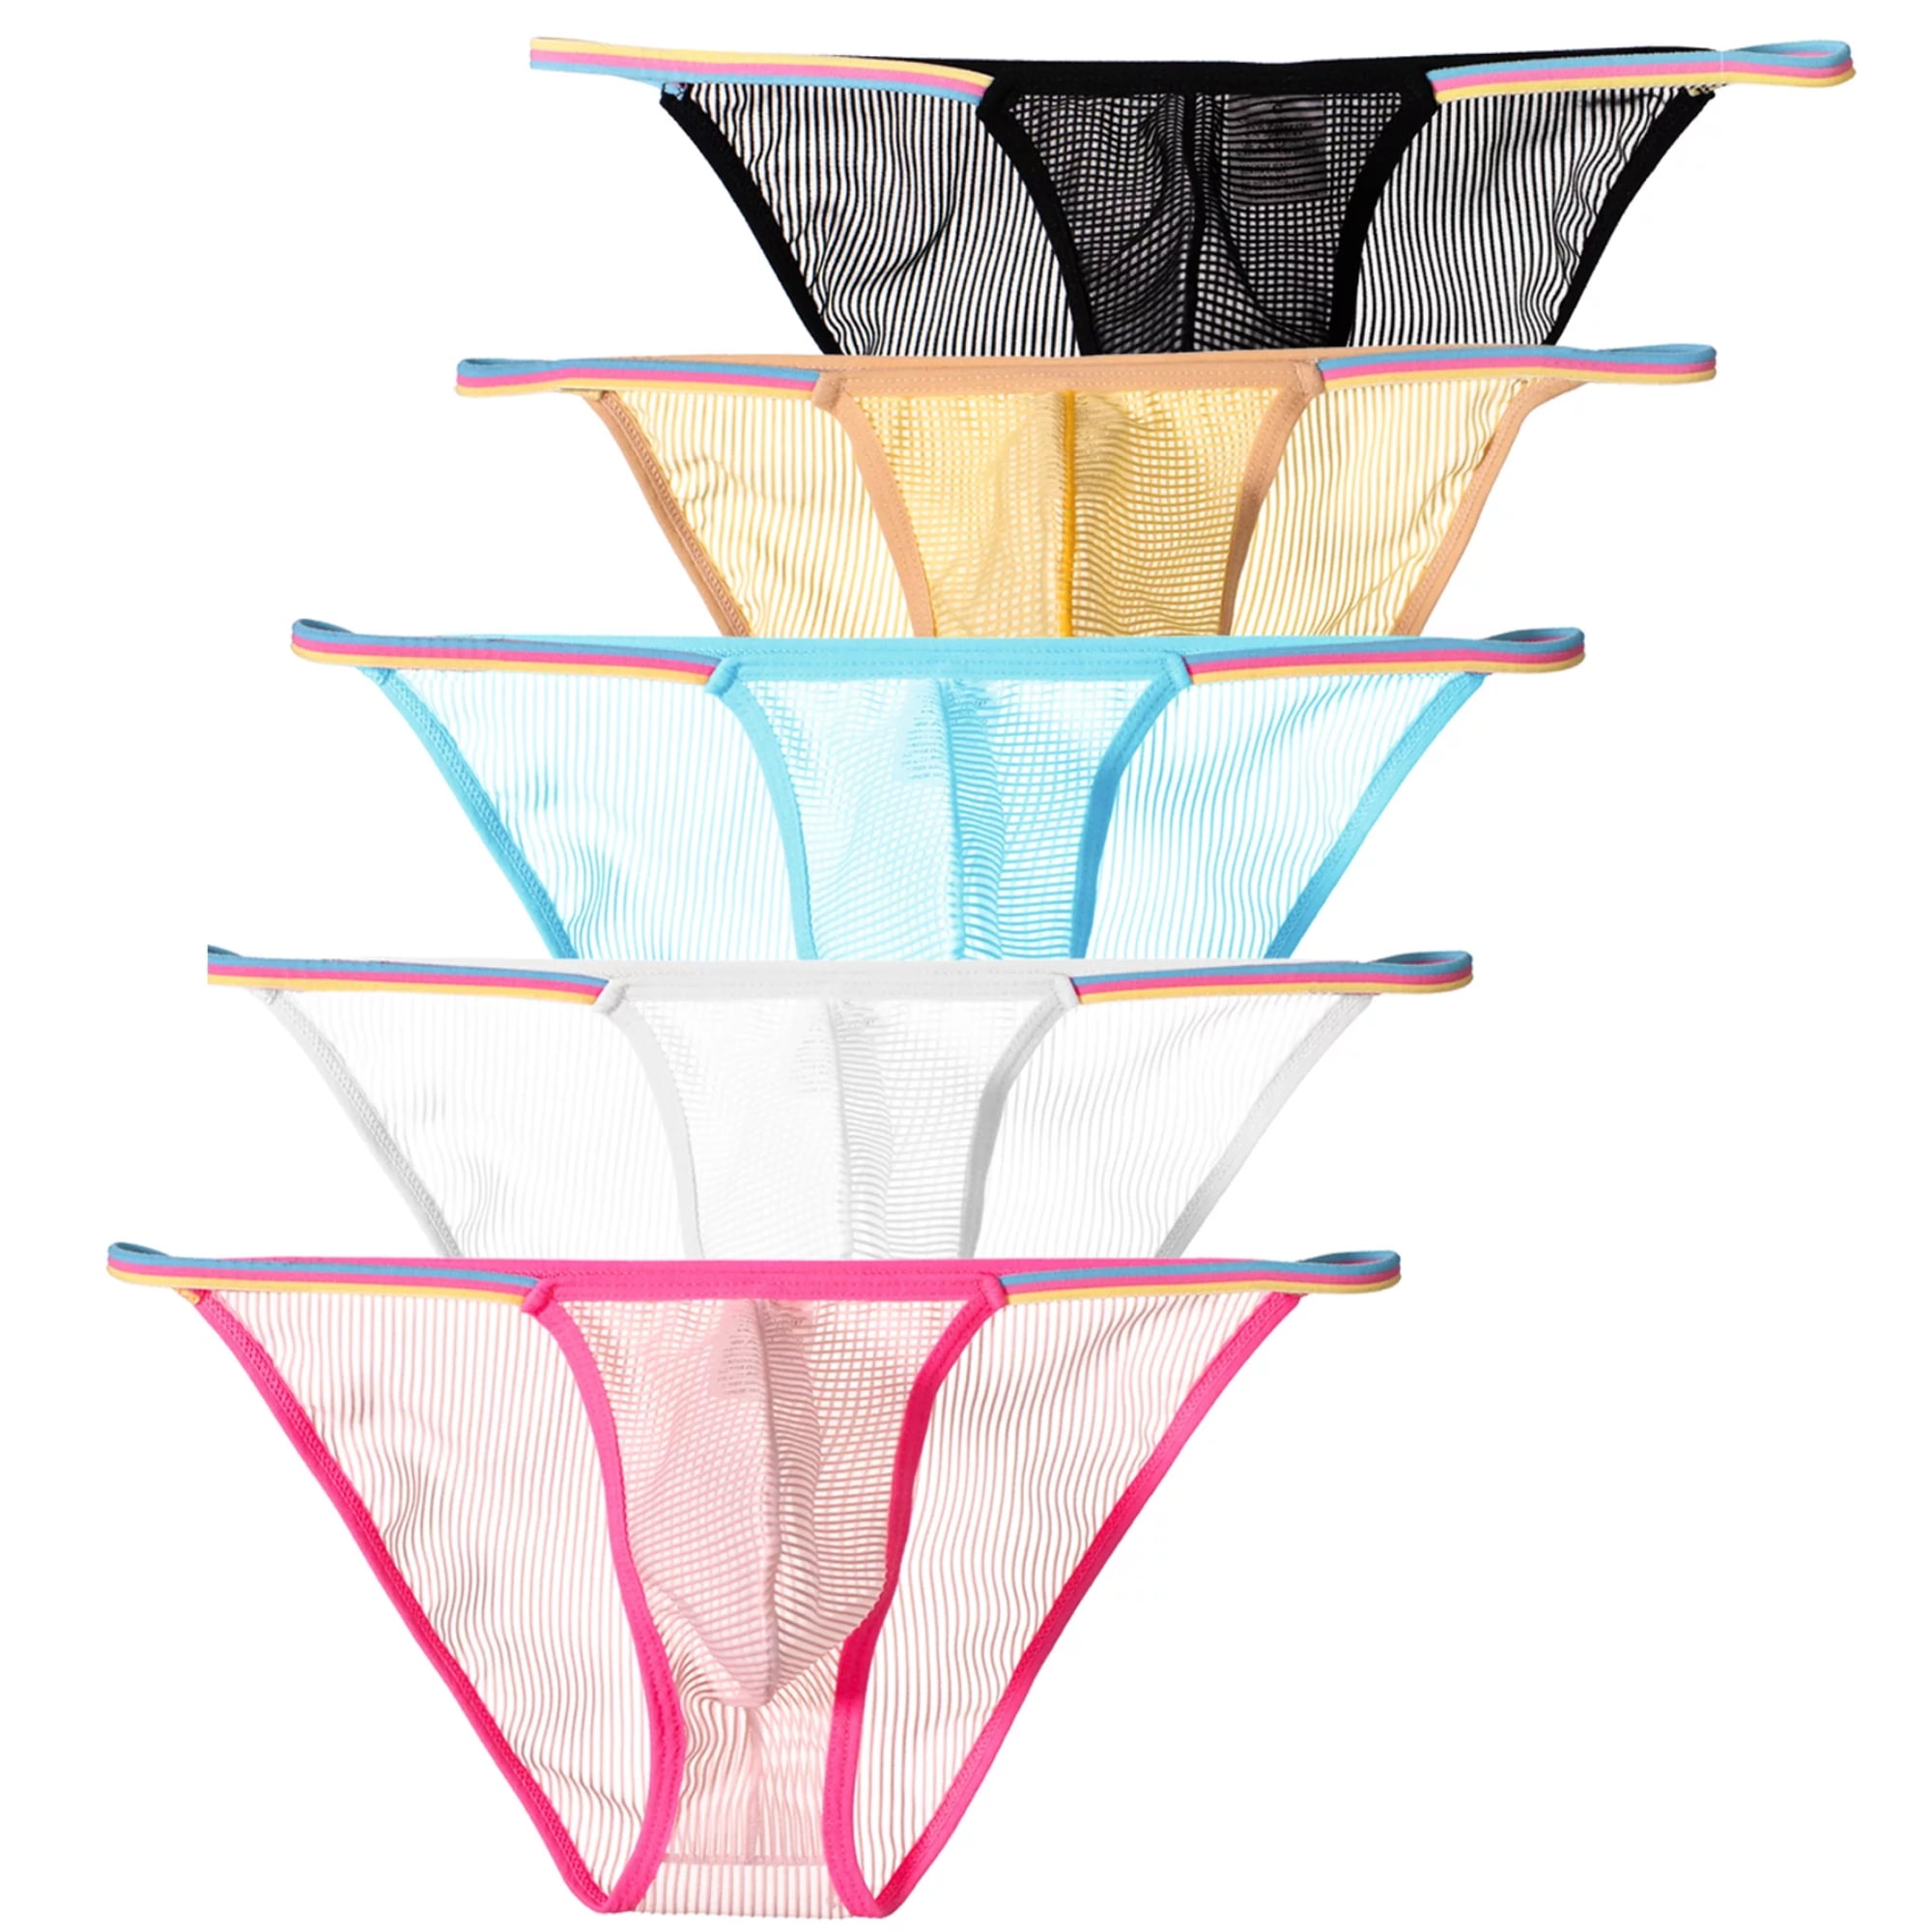 Yuyangdpb Men's Briefs Low Rise Bikini Underwear 5pack M - Walmart.com